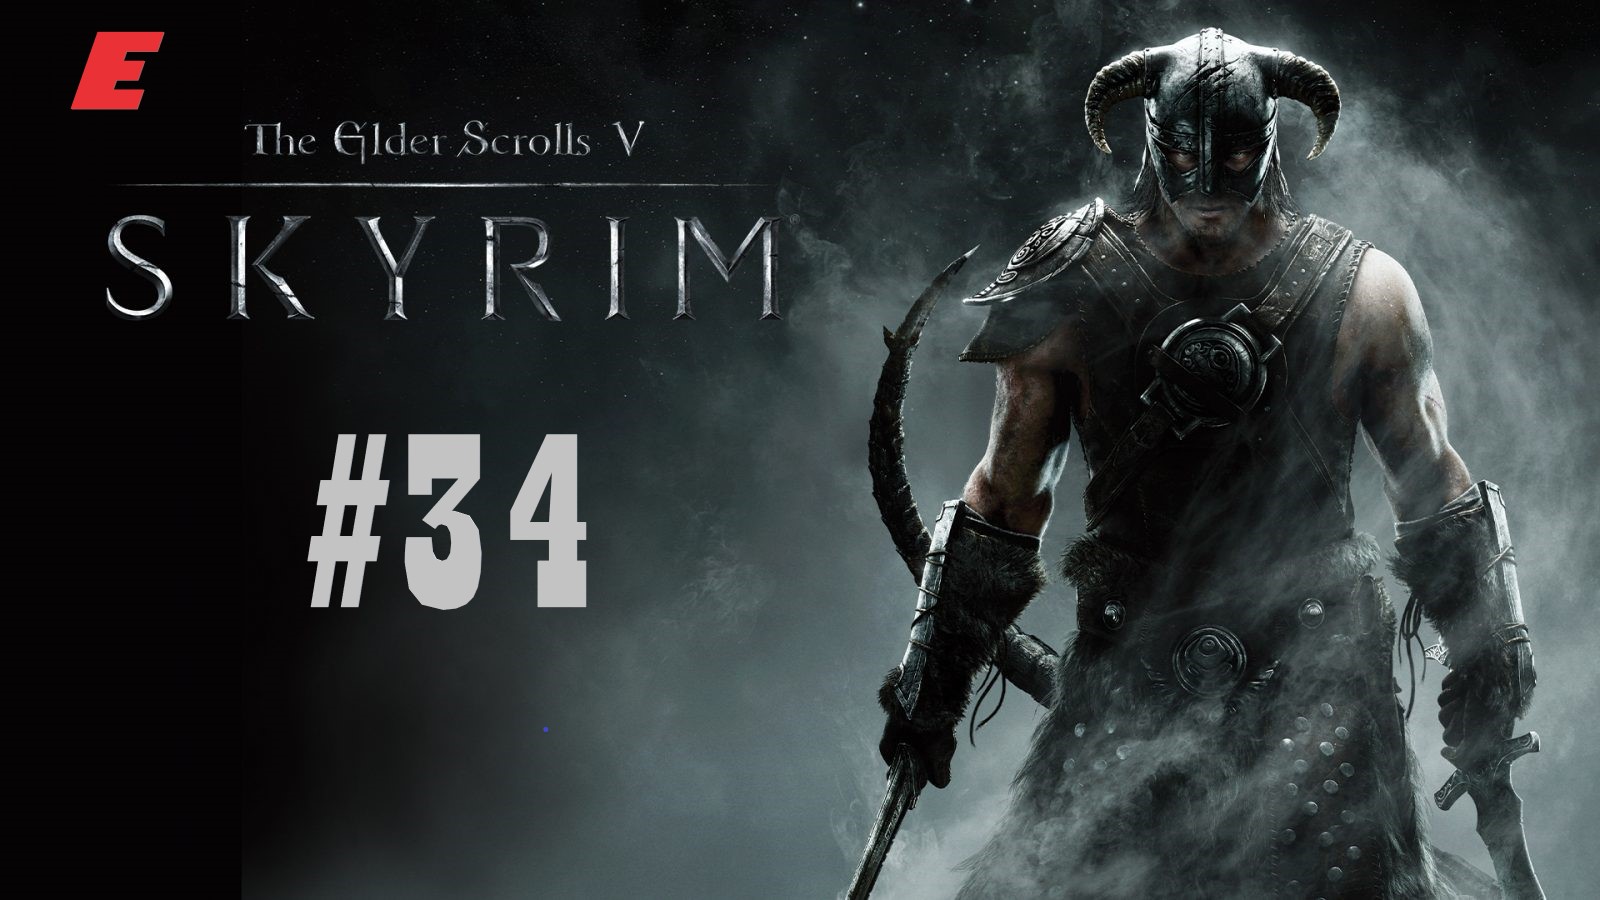 ВЫБРАЛИСЬ ИЗ ТЮРЬМЫ ►The Elder Scrolls V Skyrim Special Edition #34